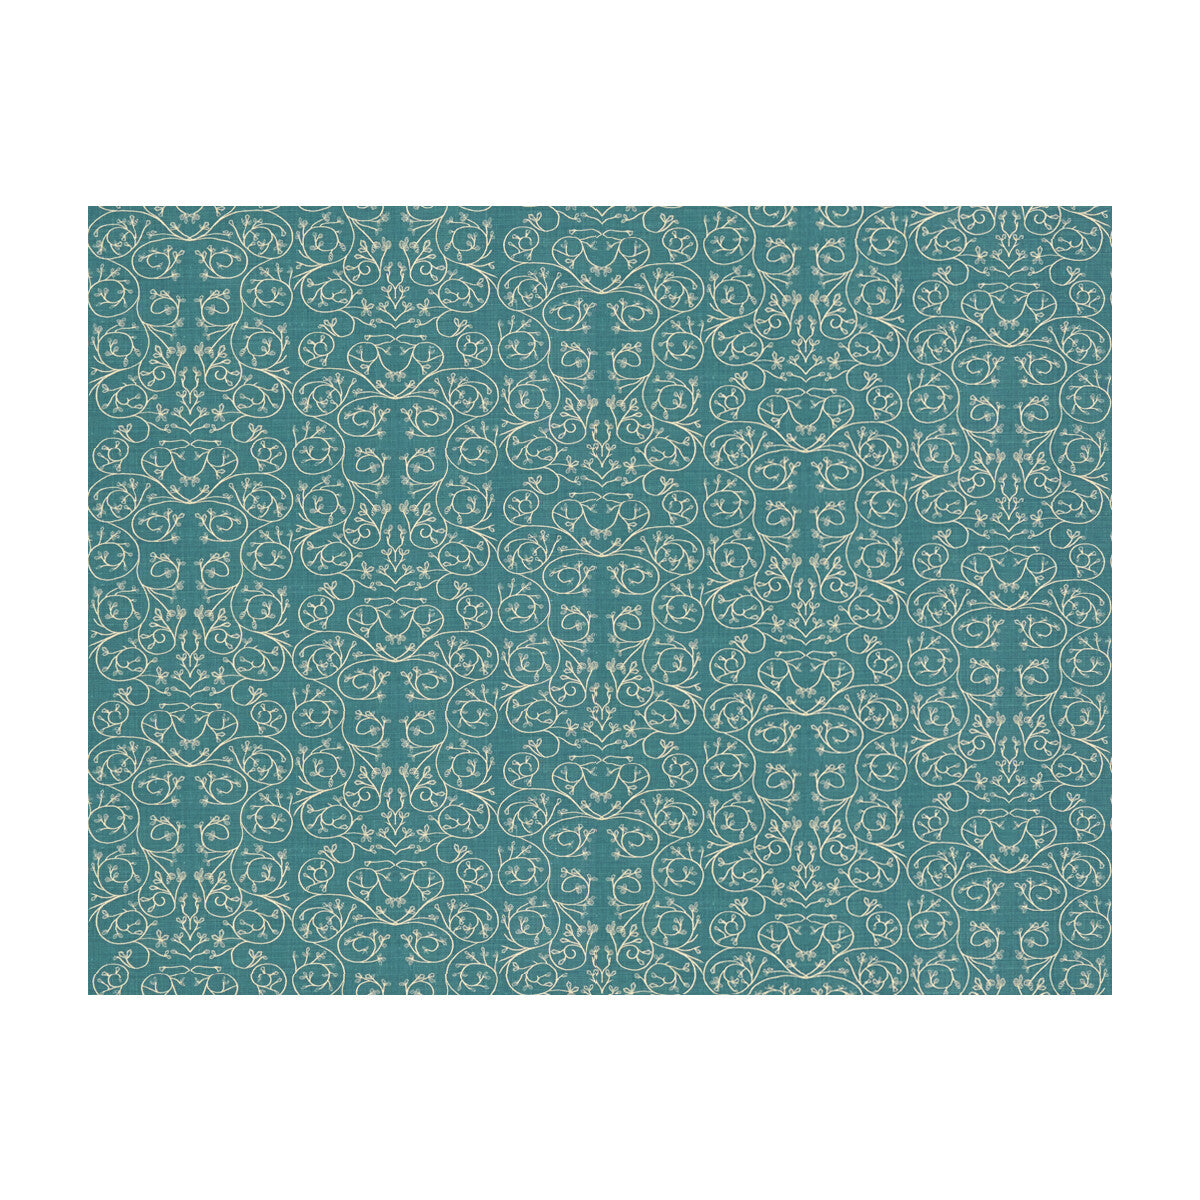 Garden Reverse fabric in cornflower color - pattern GWF-3512.5.0 - by Lee Jofa Modern in the Allegra Hicks Garden collection